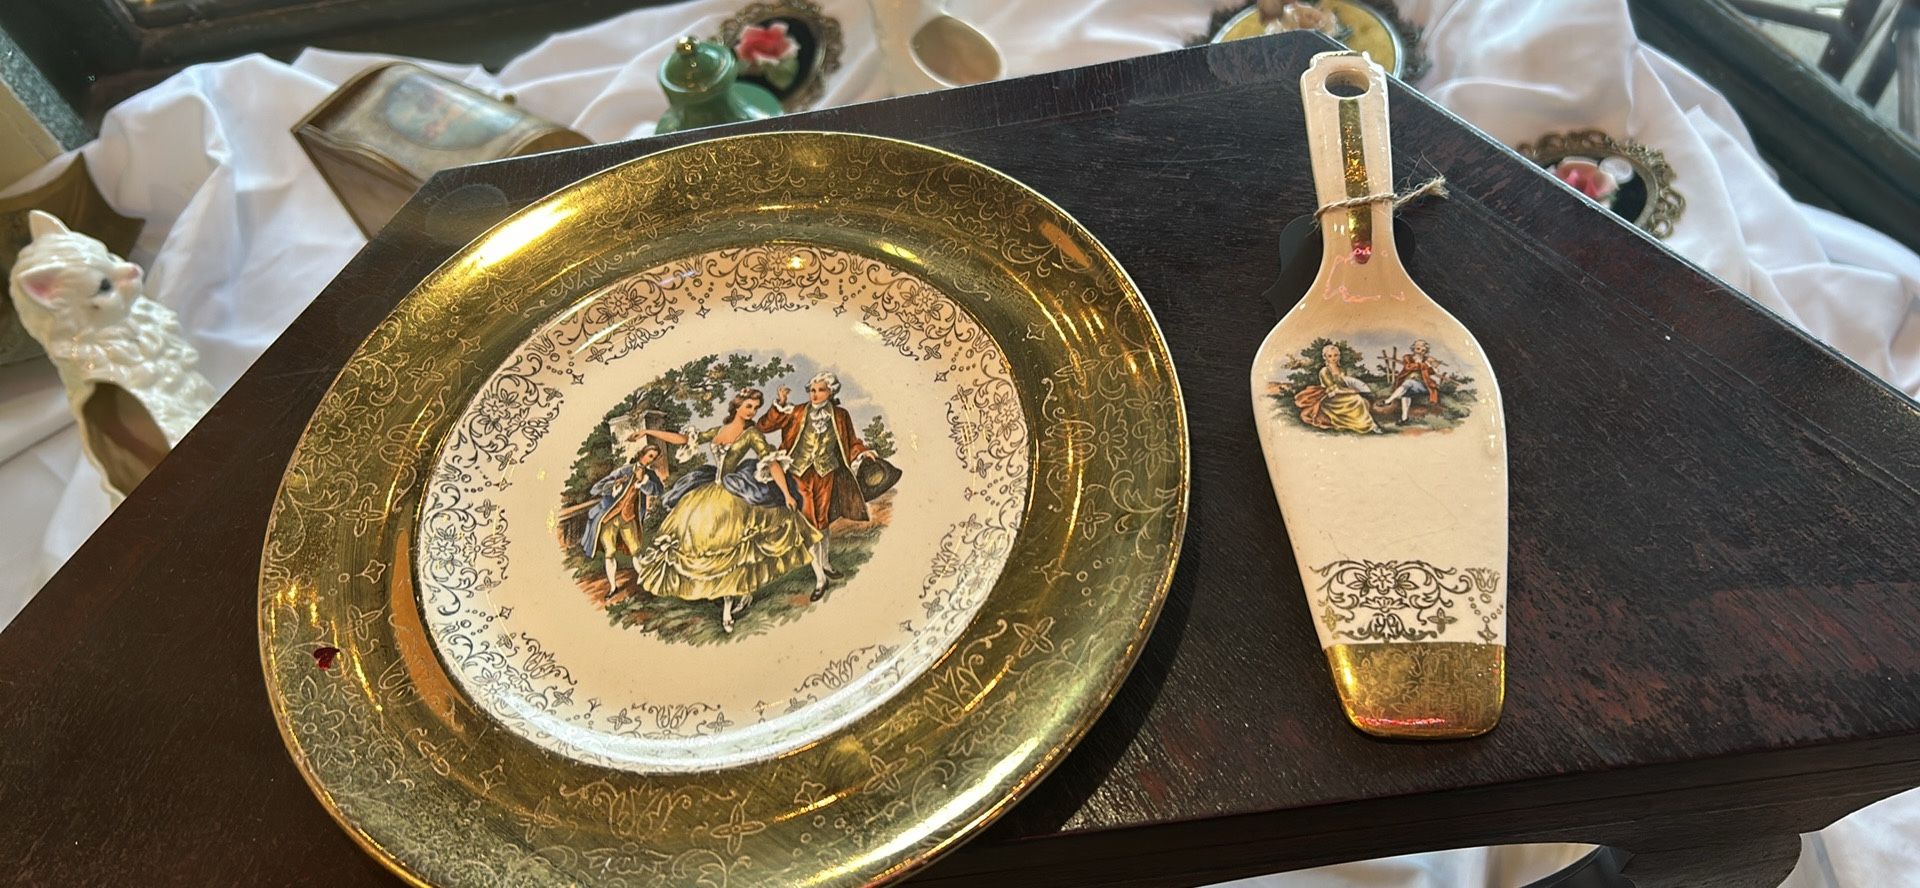 Beautiful 24 karat gold trimmed cake plate with server vintage